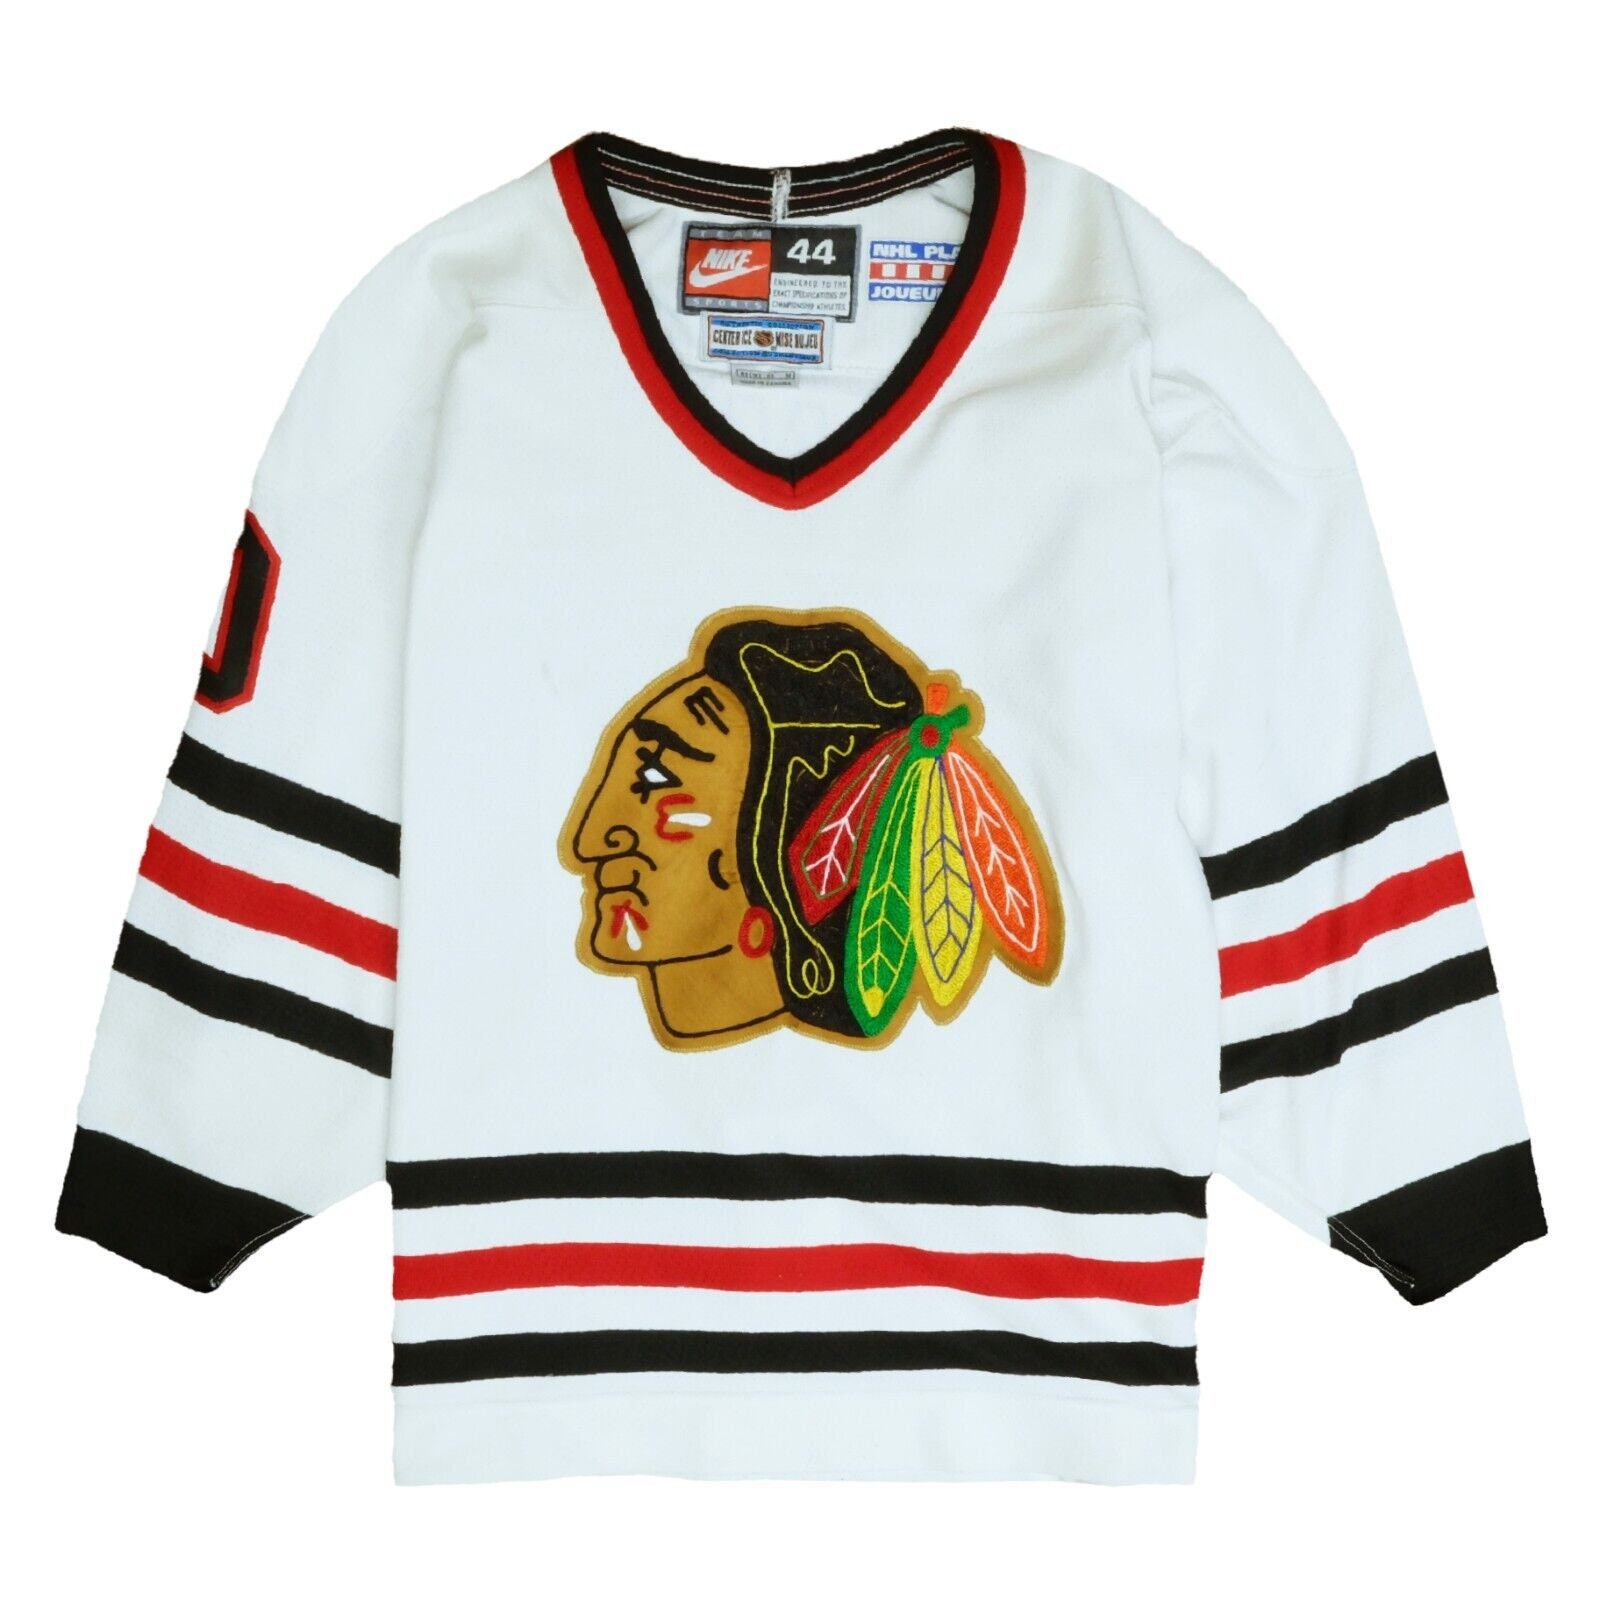  NHL Youth's Chicago Blackhawks Patrick Sharp Premium Jersey,  White Small/Medium : Sports & Outdoors